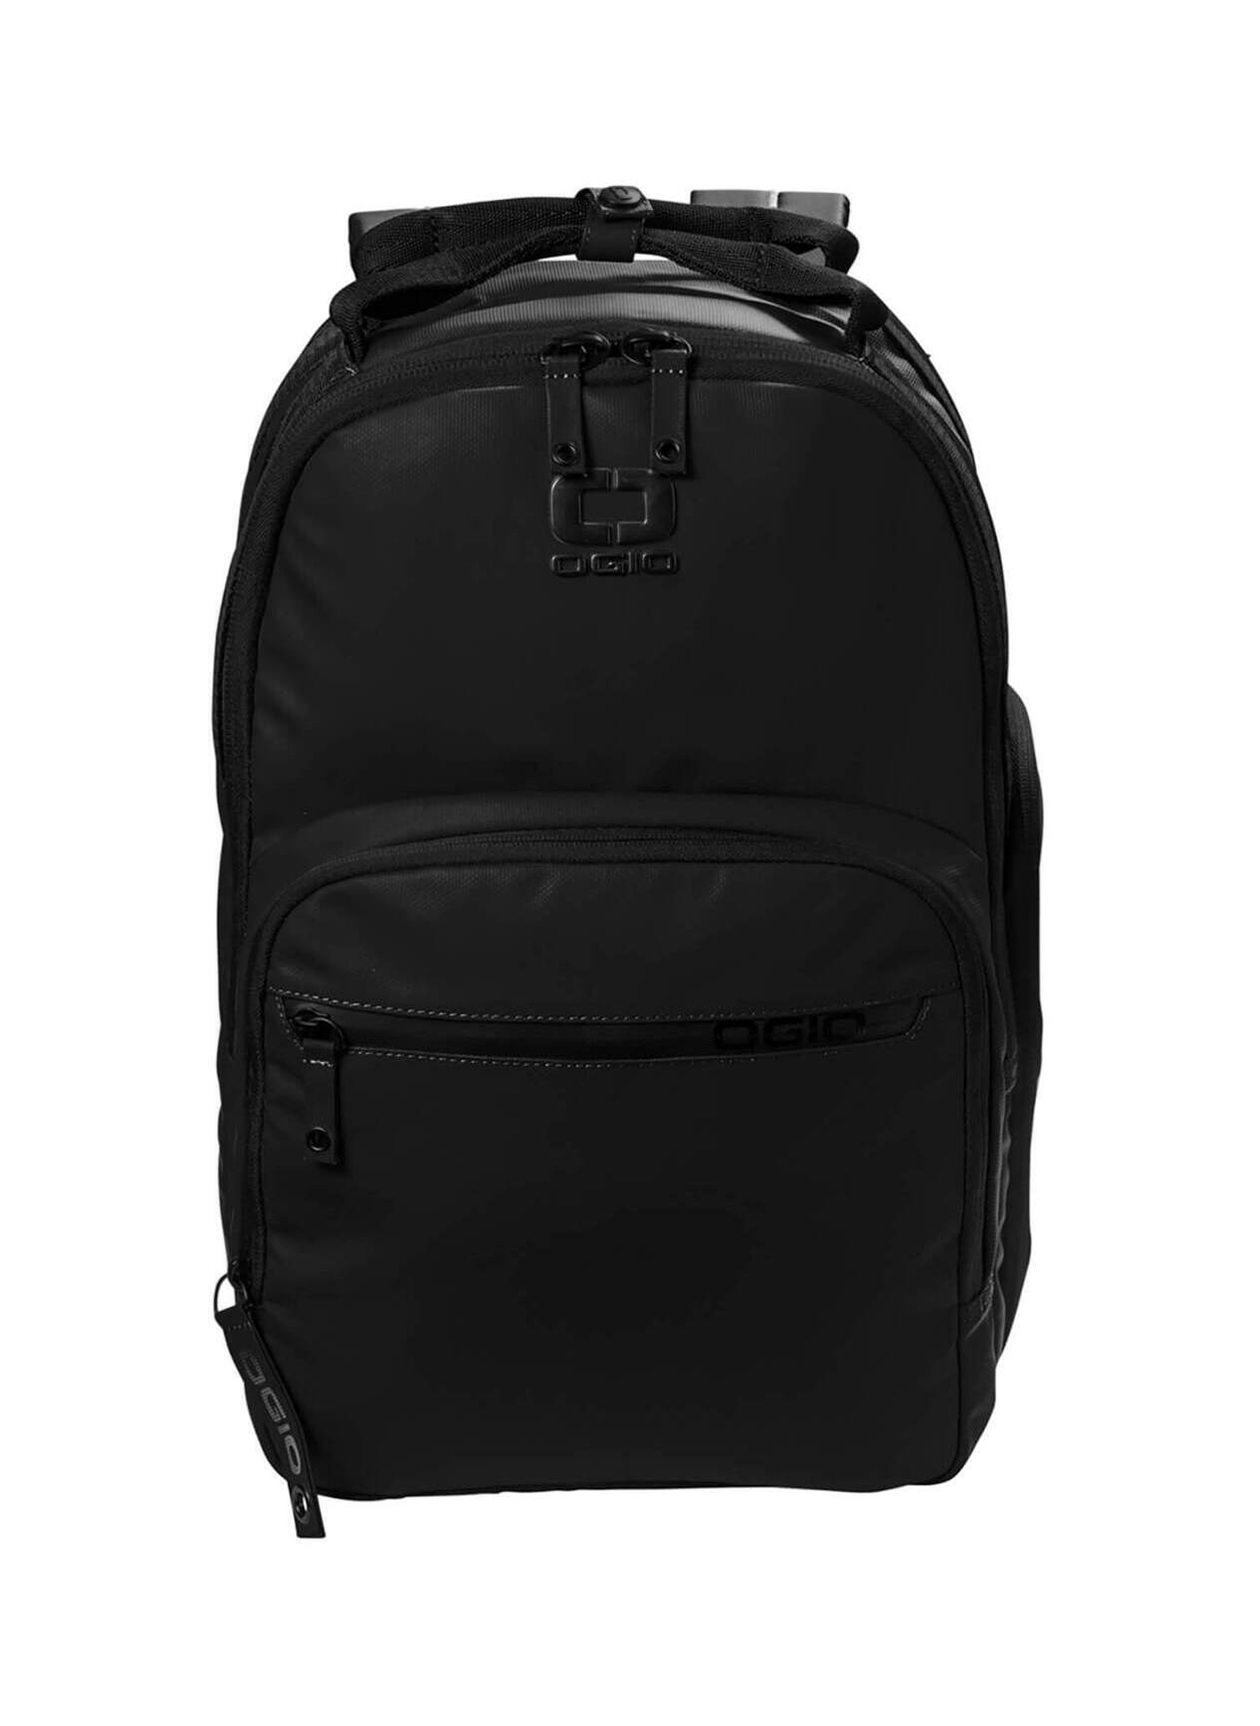 OGIO Blacktop Commuter Transfer Backpack